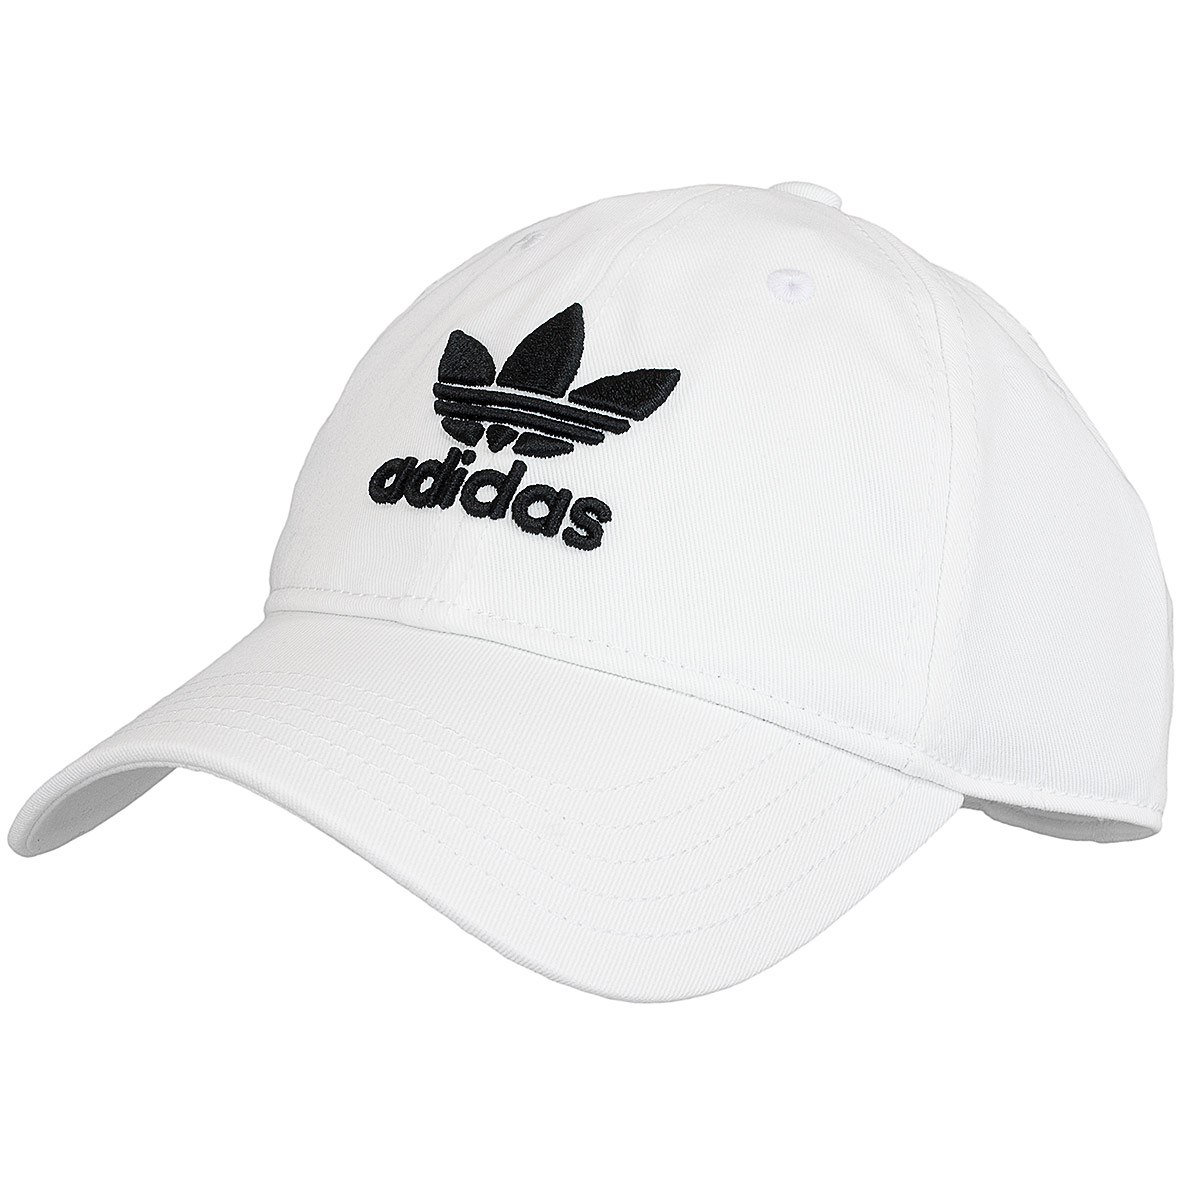 ☆ Adidas Originals Snapback Cap Trefoil weiß - hier bestellen!